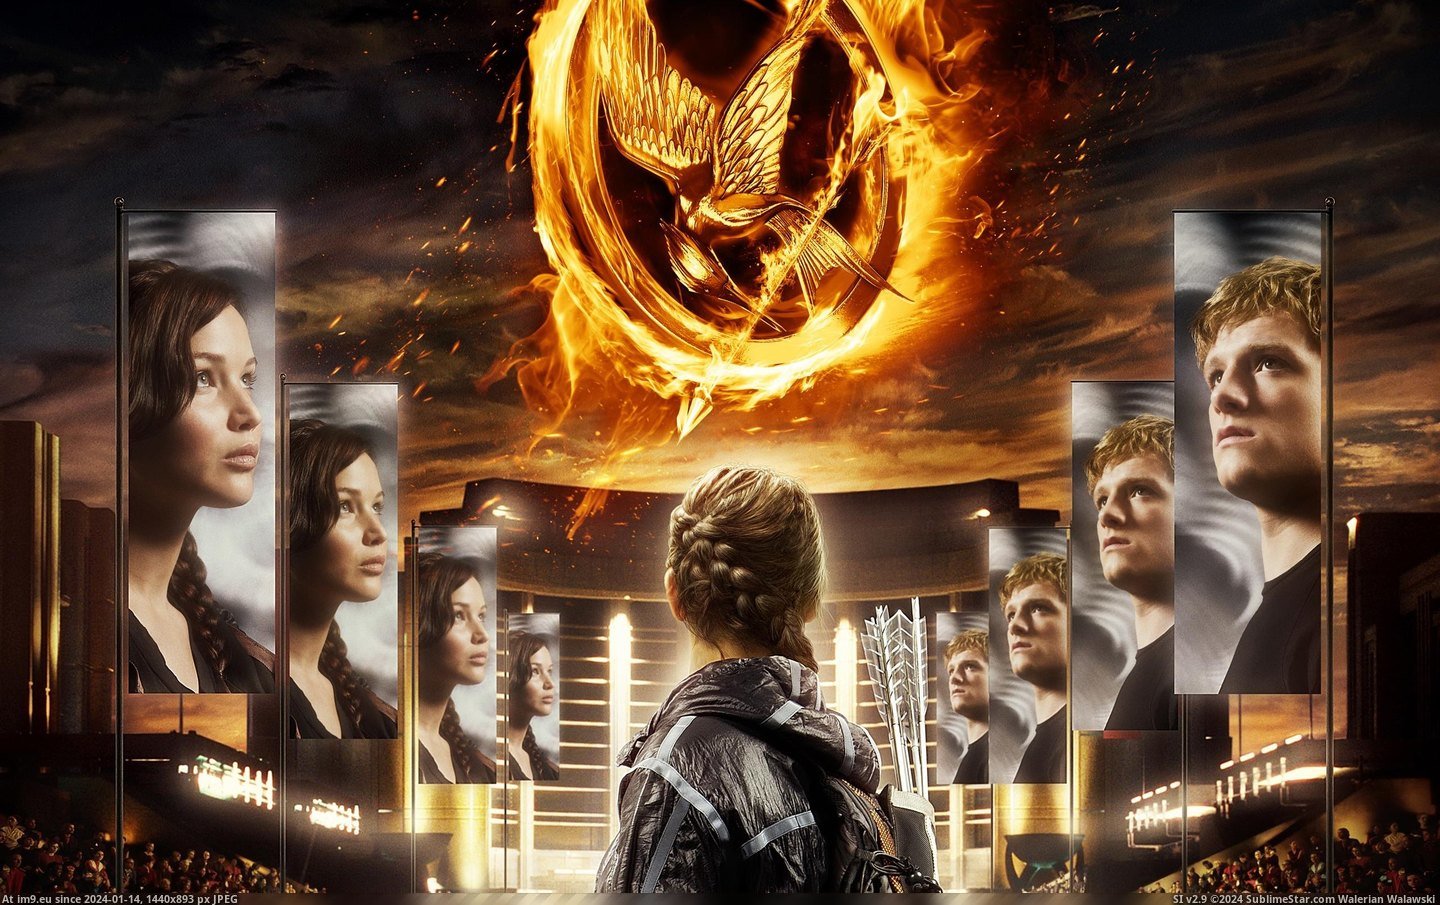 #Wallpaper #Games #Hunger #Wide The Hunger Games 2012 Wide HD Wallpaper Pic. (Bild von album Unique HD Wallpapers))